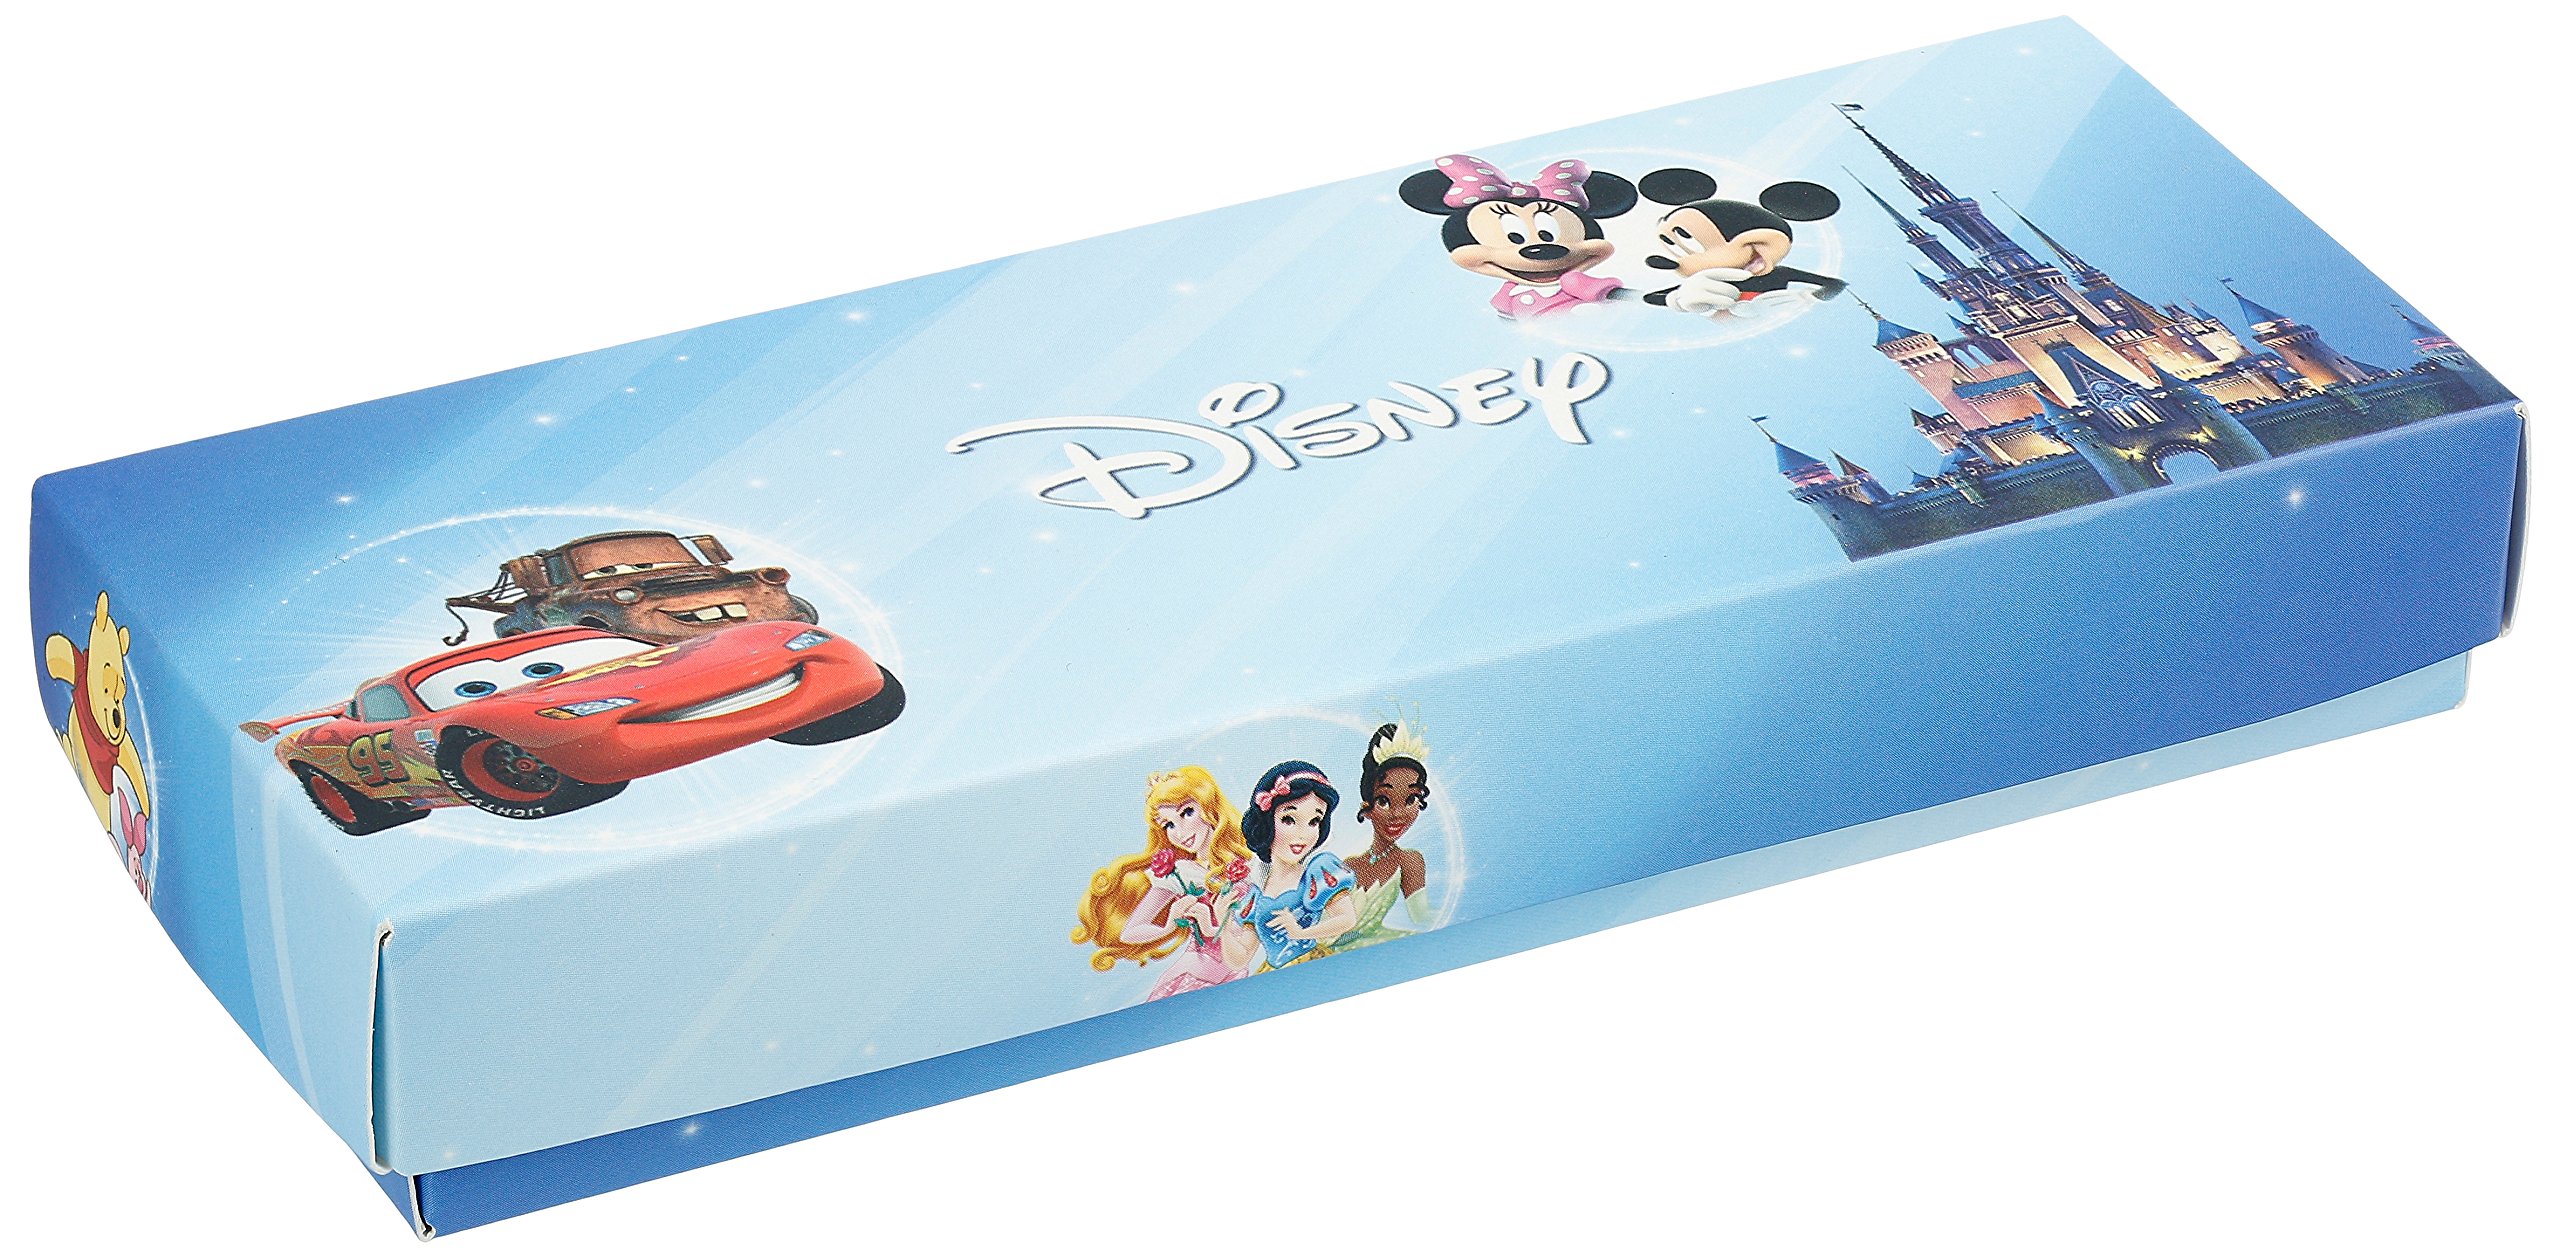 Disney Frozen Kids' Plastic Time Teacher Analog Quartz Nylon Strap Watch